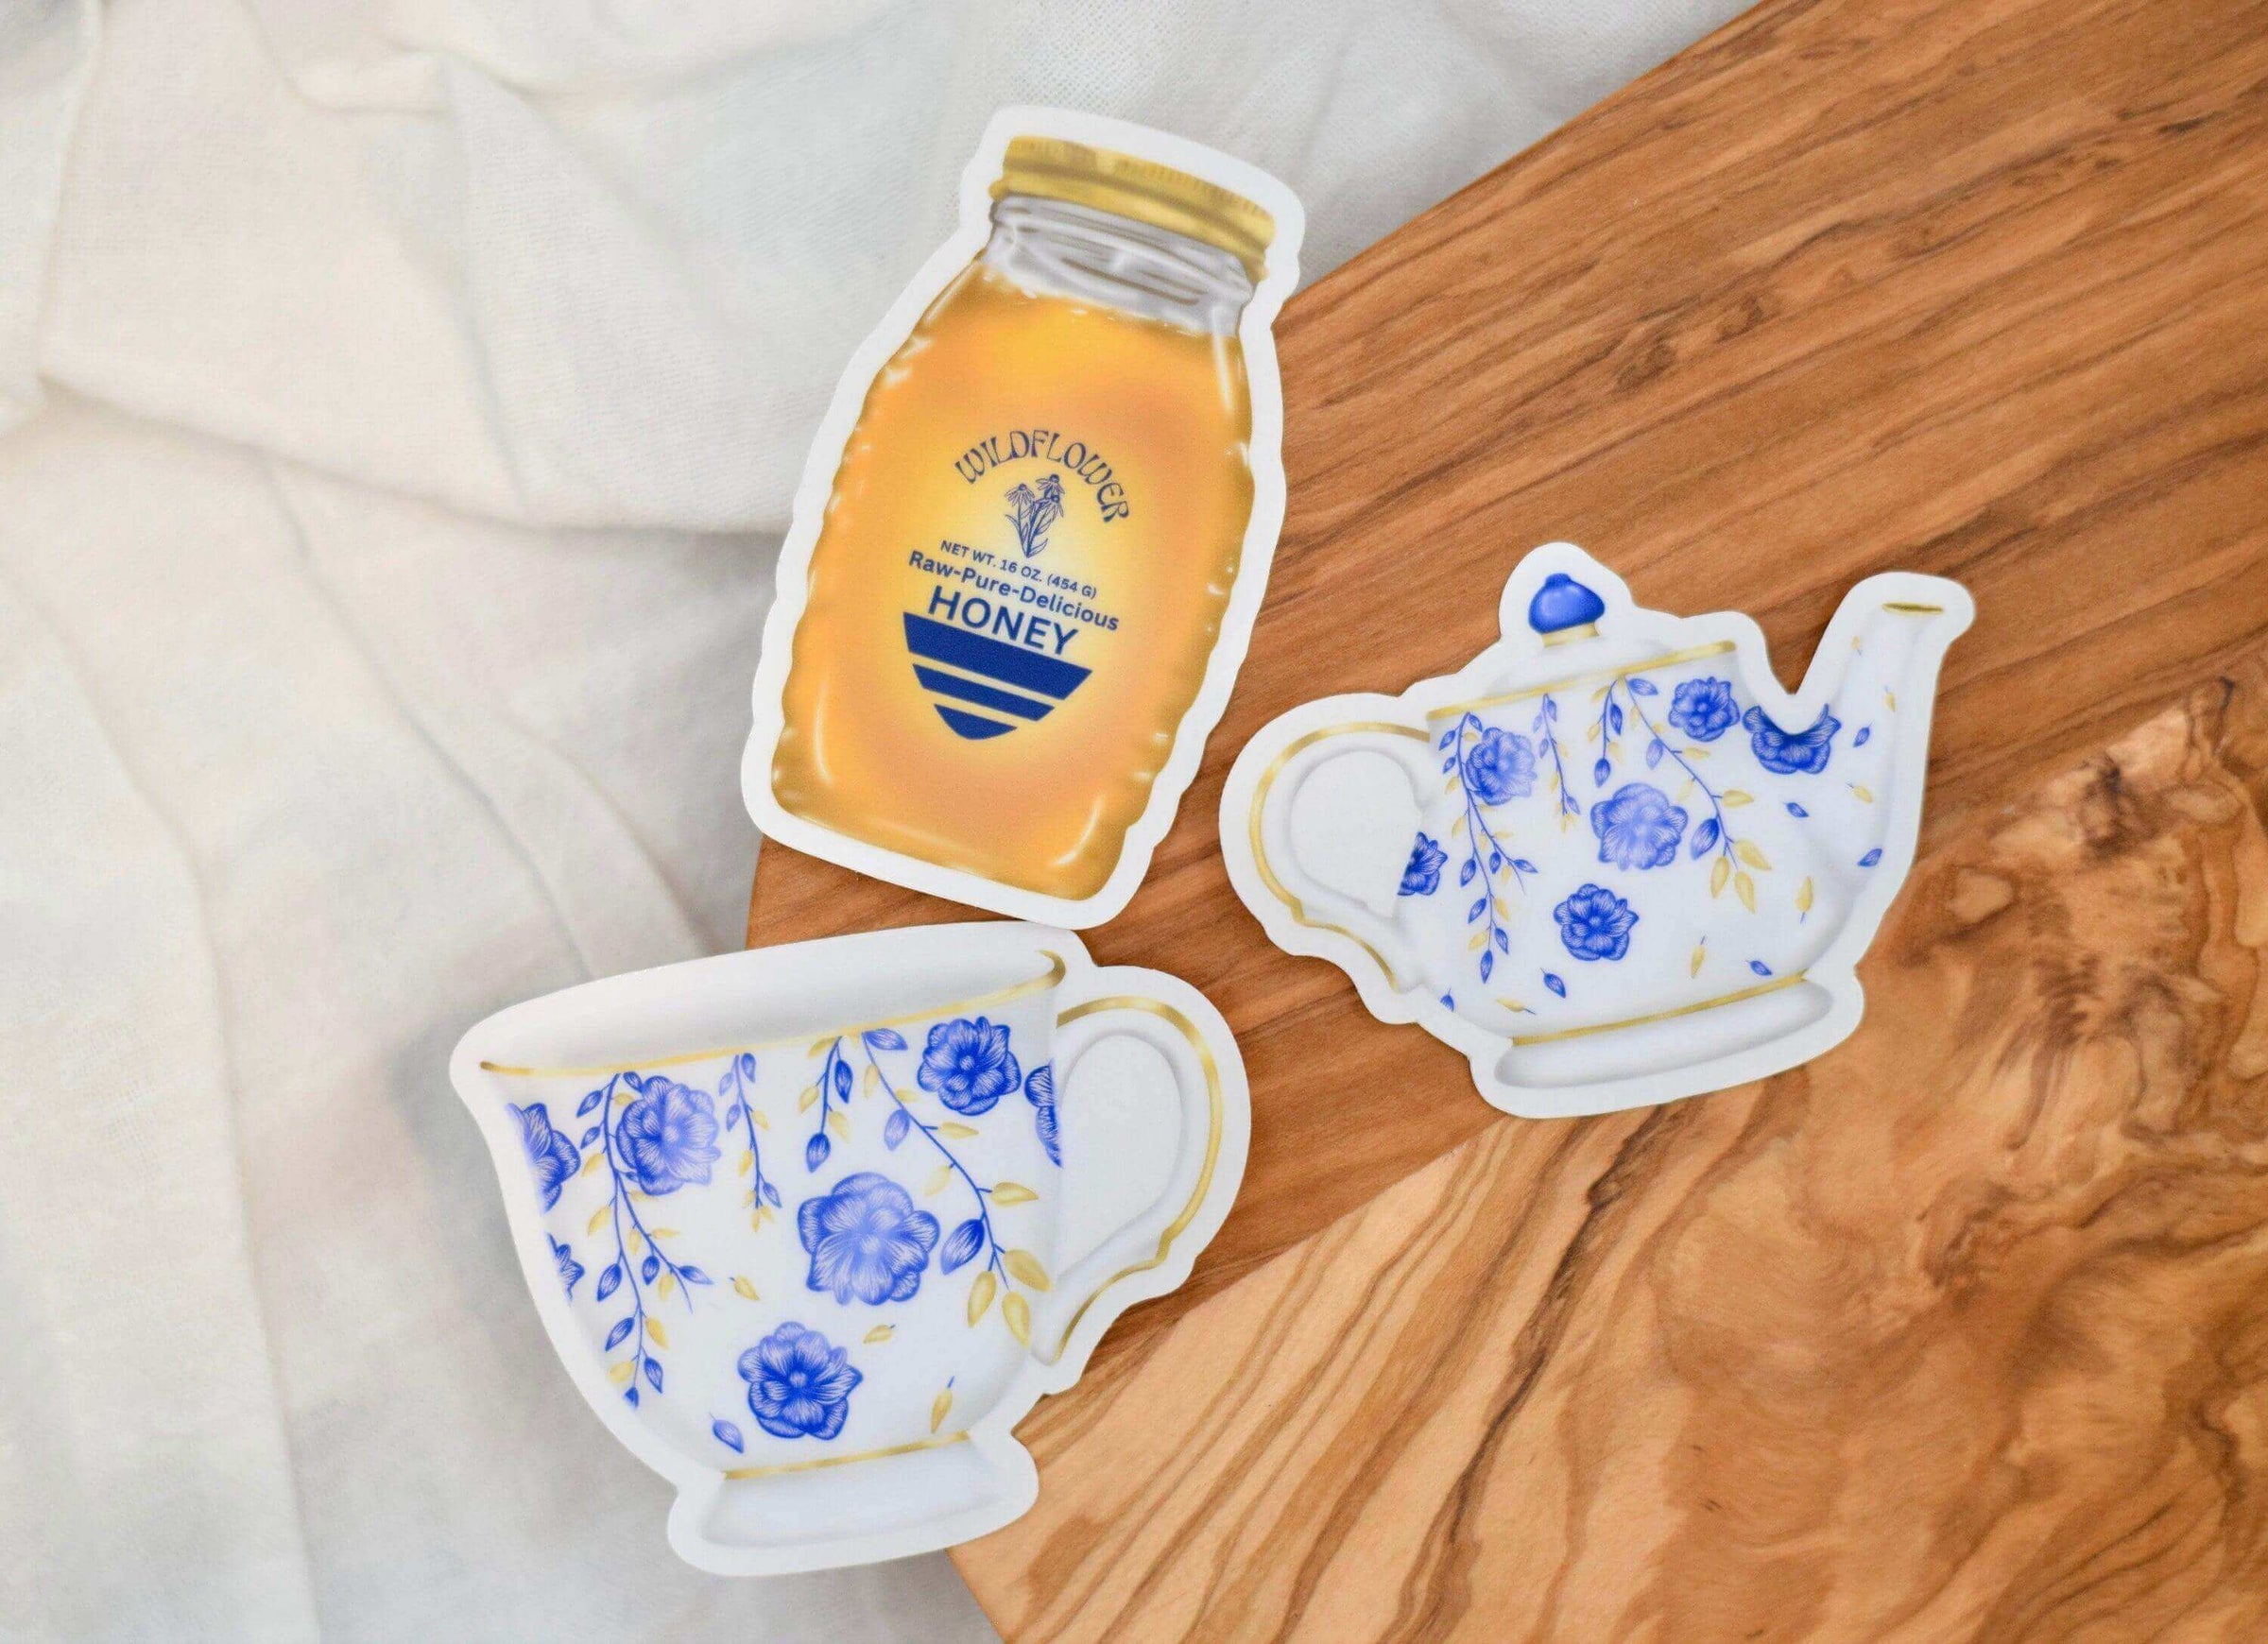 Pack of 3 Tea Party Sticker Set: Blue Rose Porcelain Teapot, Tea Cup, and Wildflower Honey Jar, Waterproof Decals for Tea Party Favors - Winks Design Studio,LLC